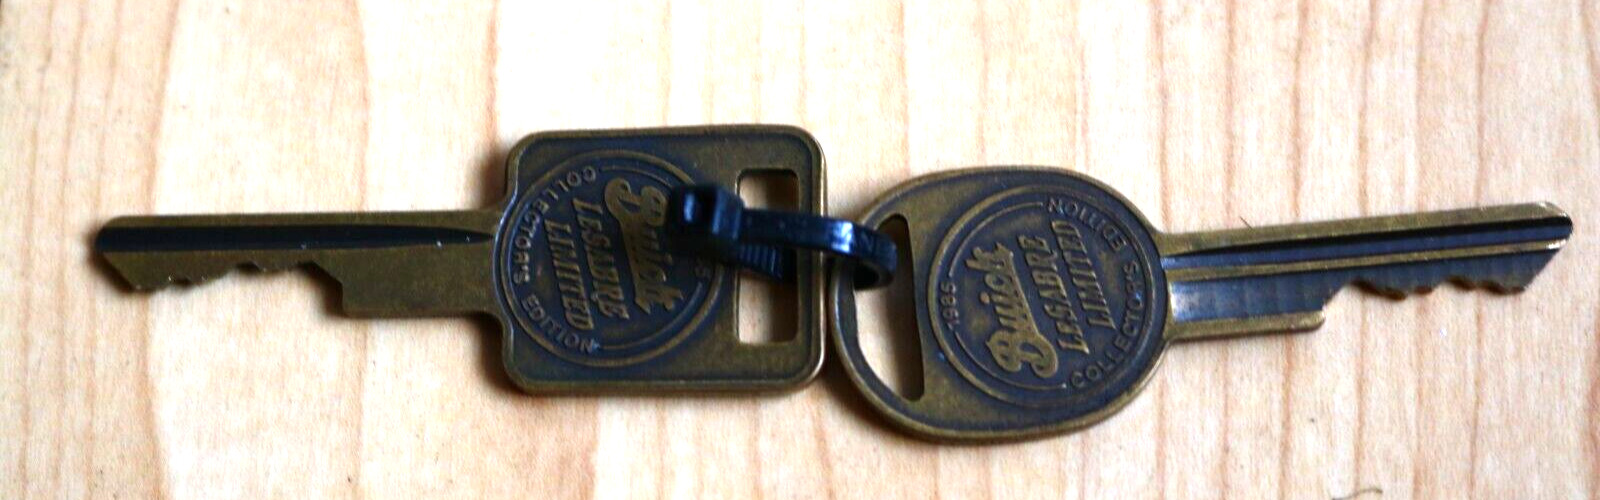 1985 buick lesabre limted collectors edition keys